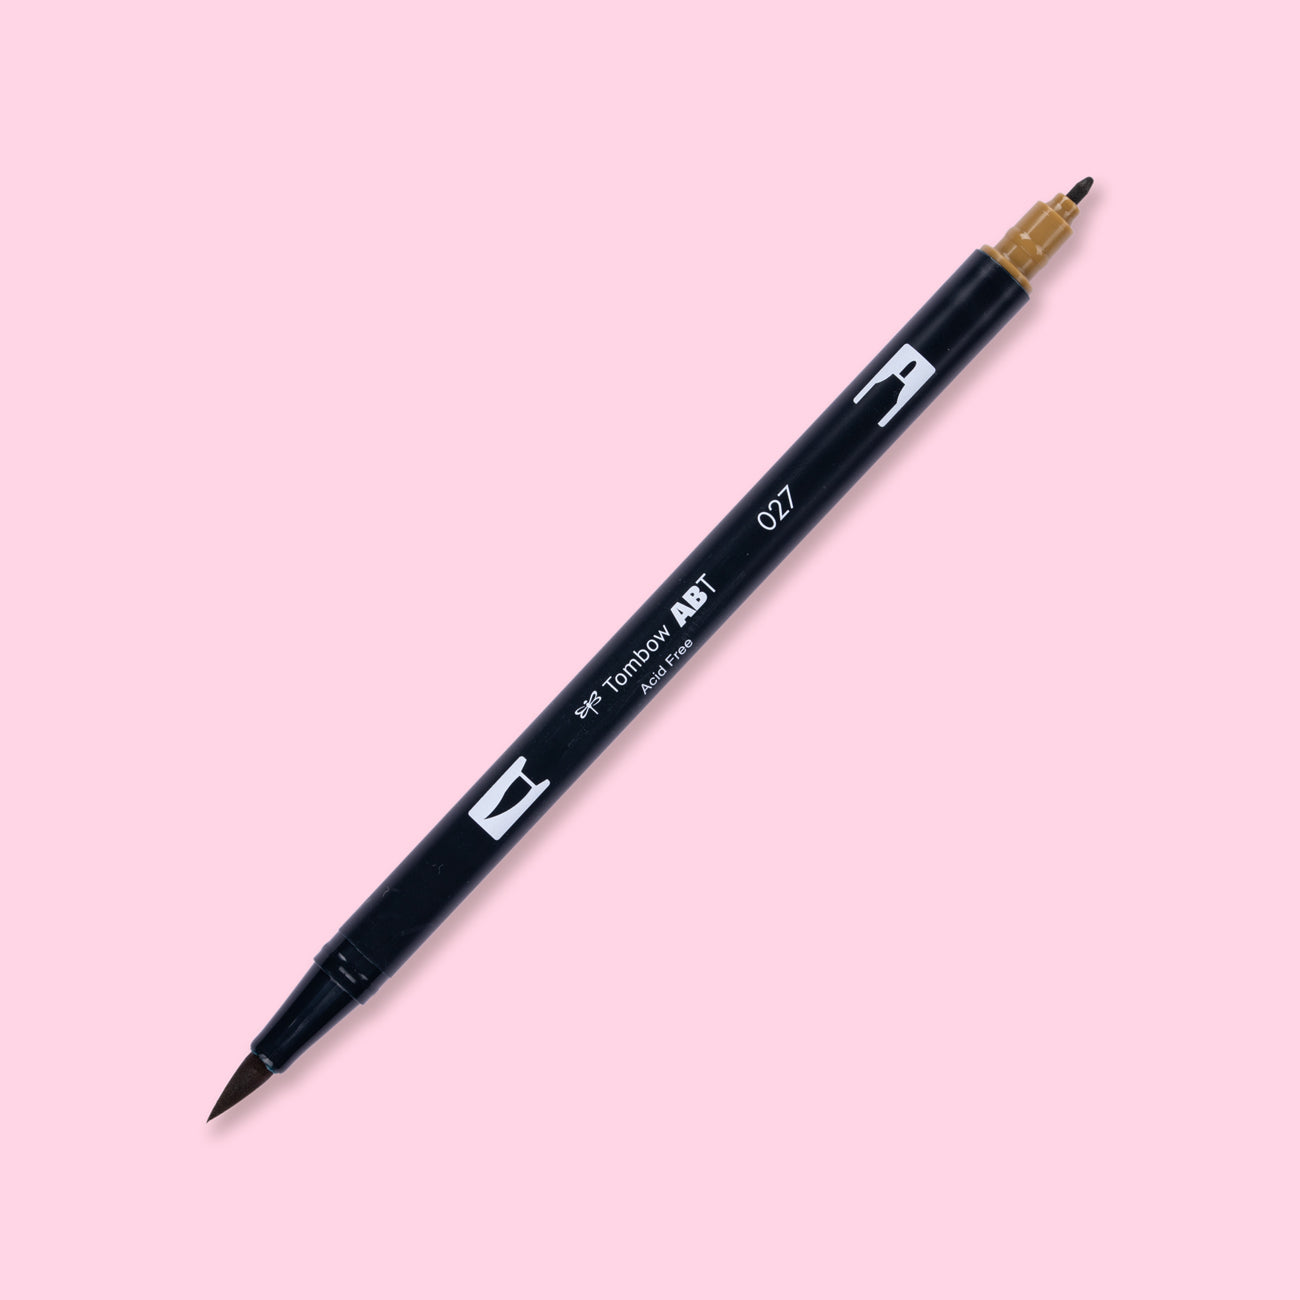 Tombow Dual Brush Pen - 027 - Dark Ochre